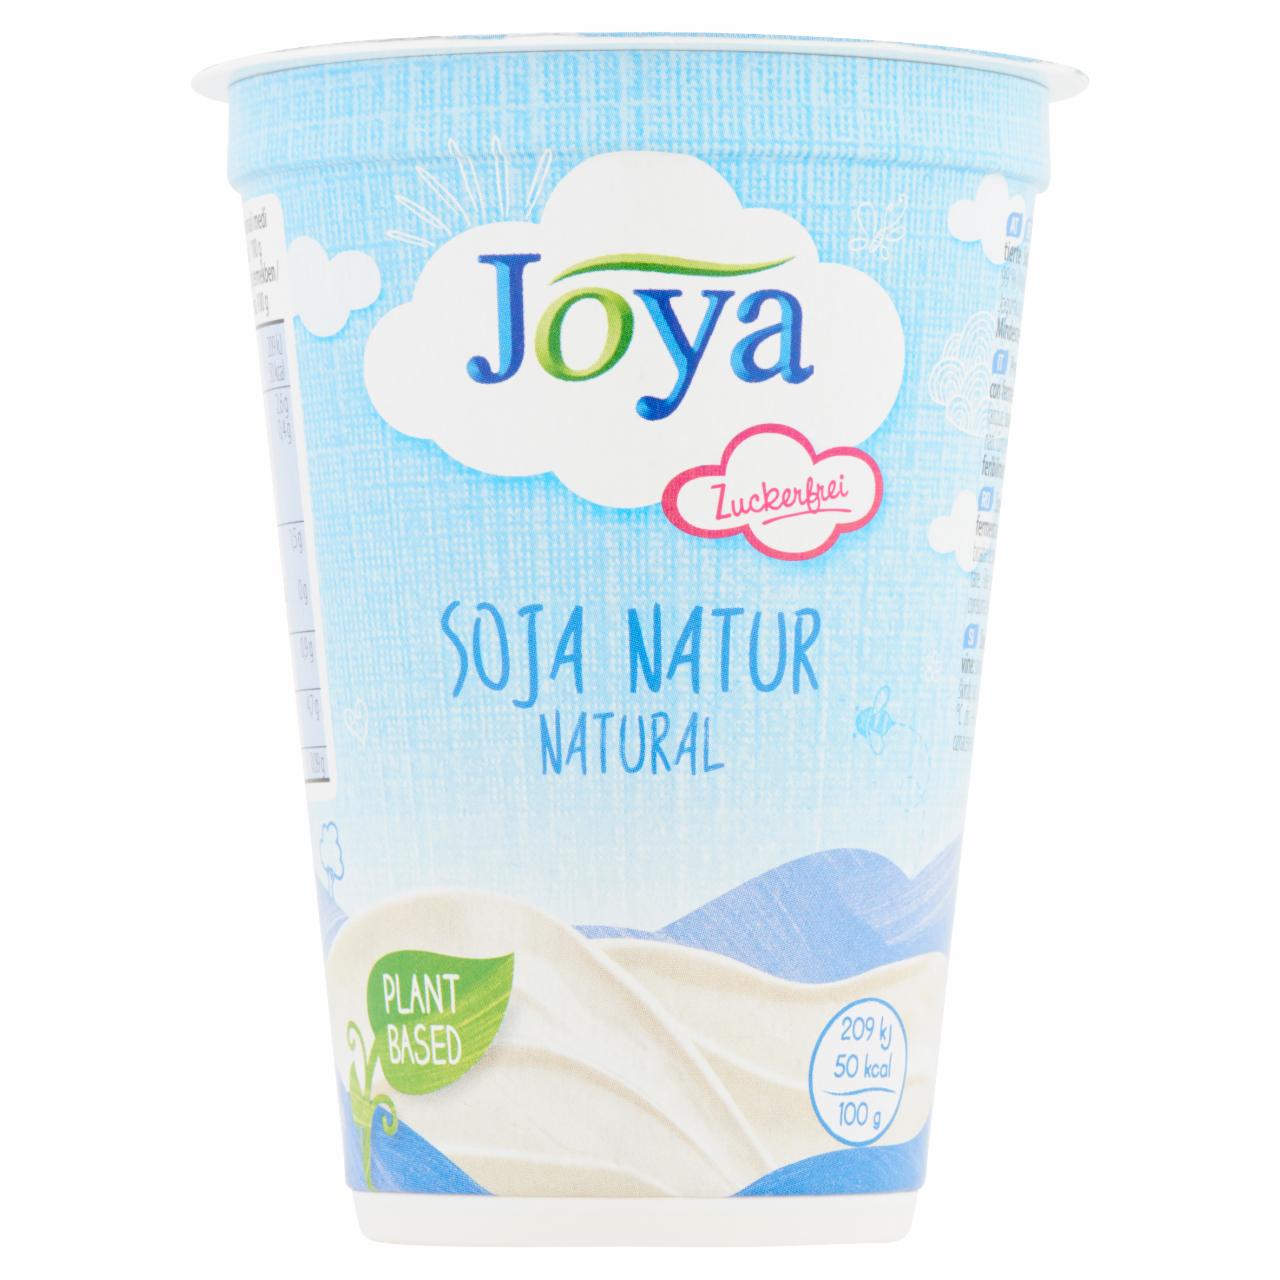 Képek - Joya Szójagurt natúr 200 g